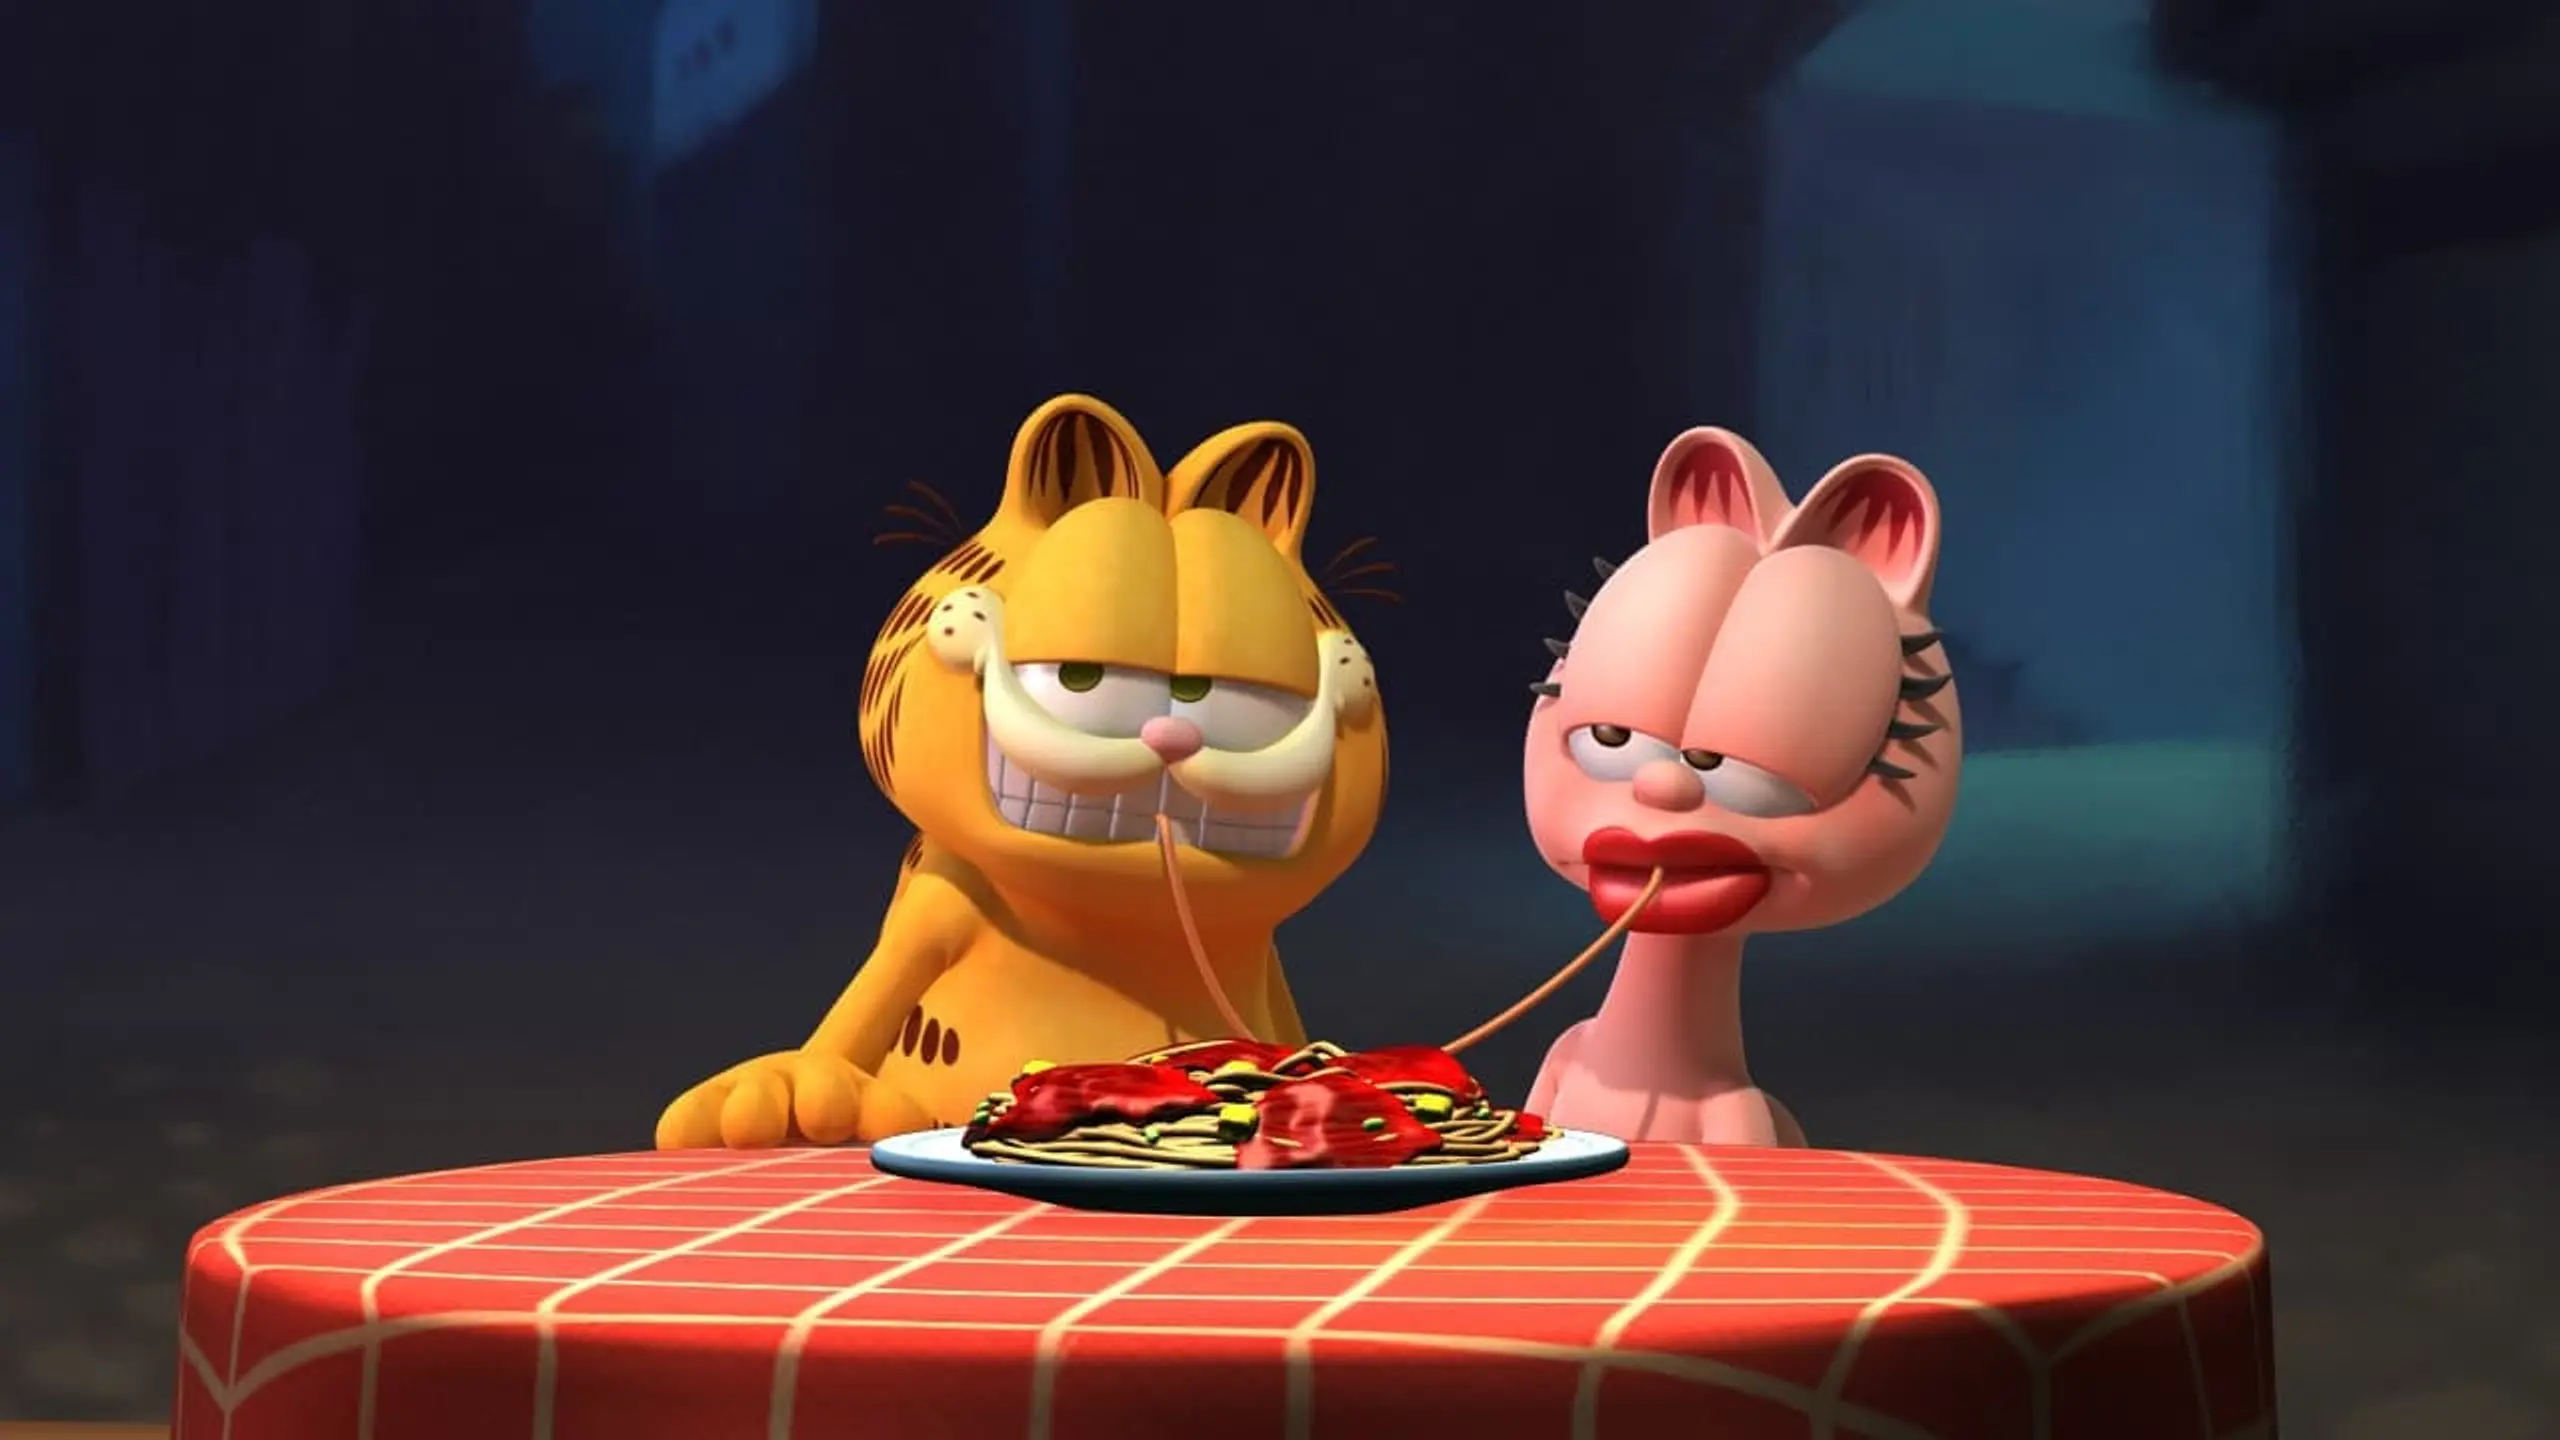 Garfield's Fun Fest